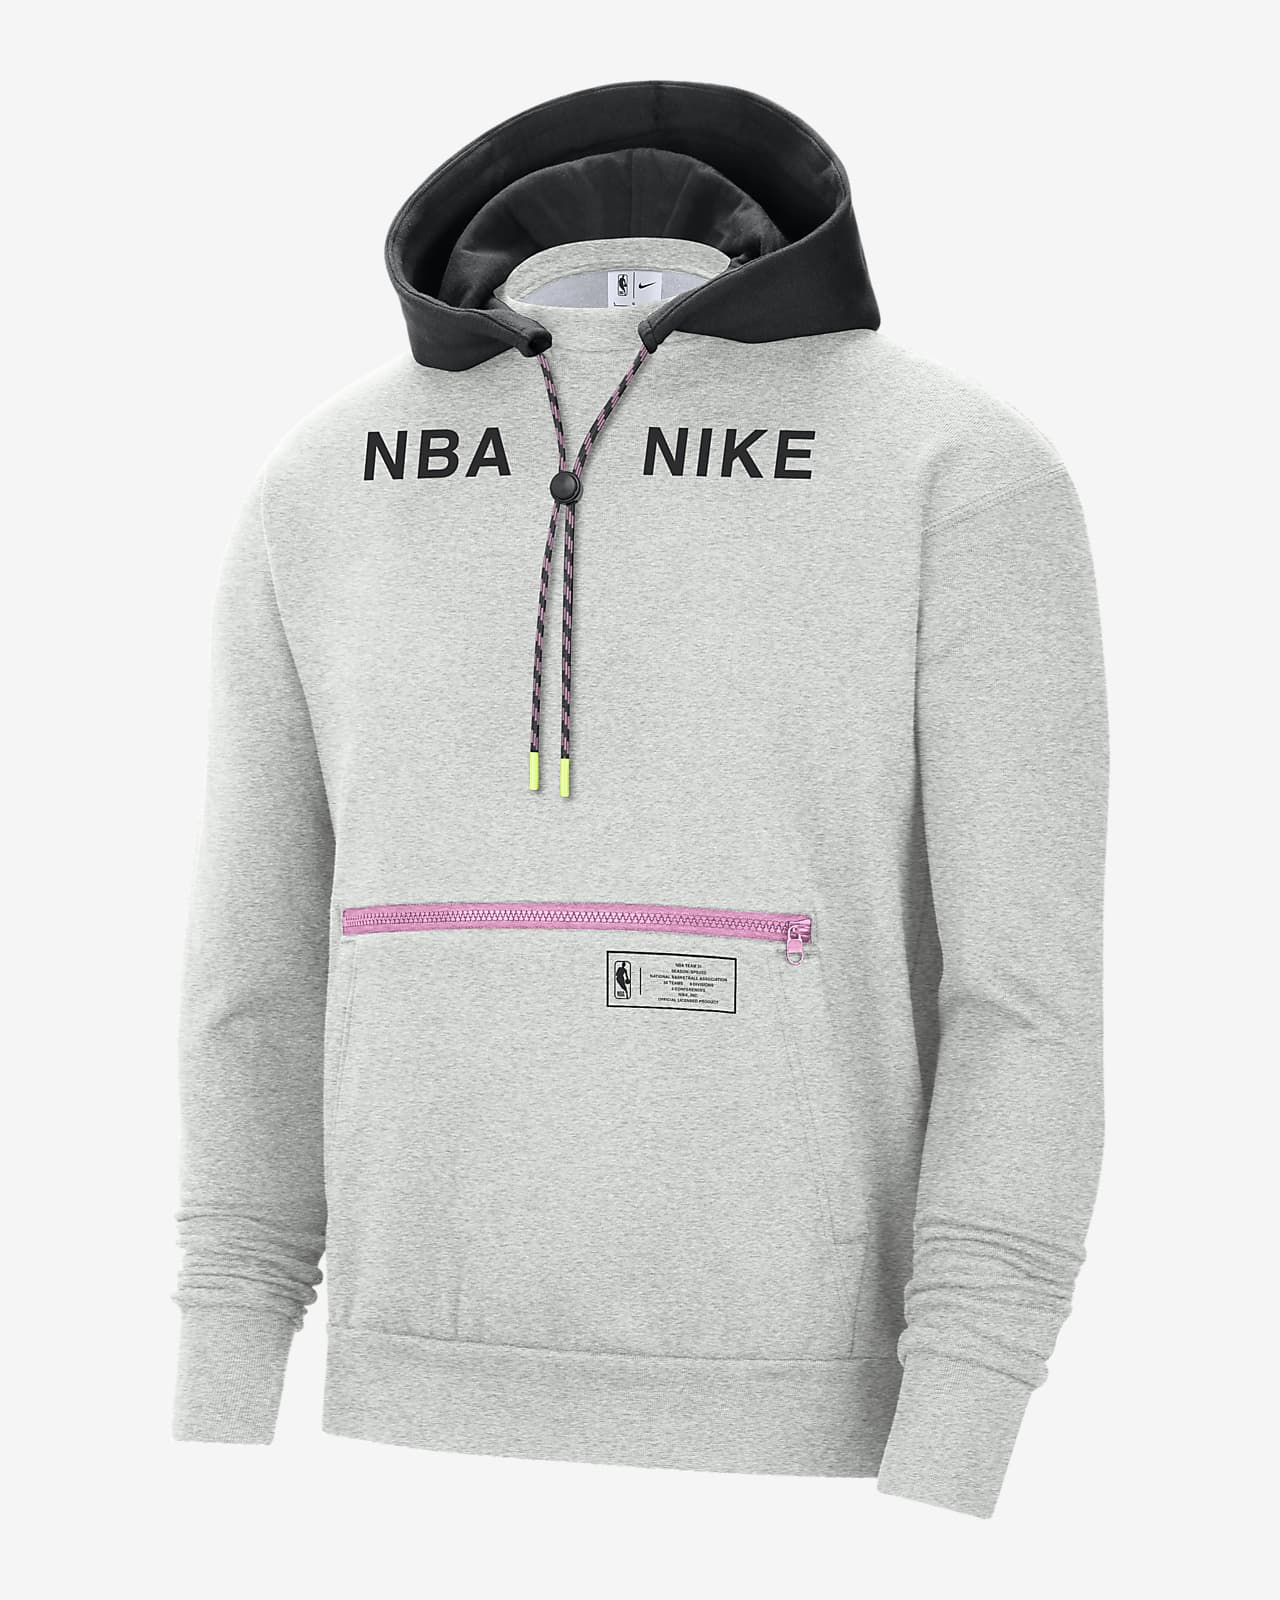 Hommes NBA. Nike FR